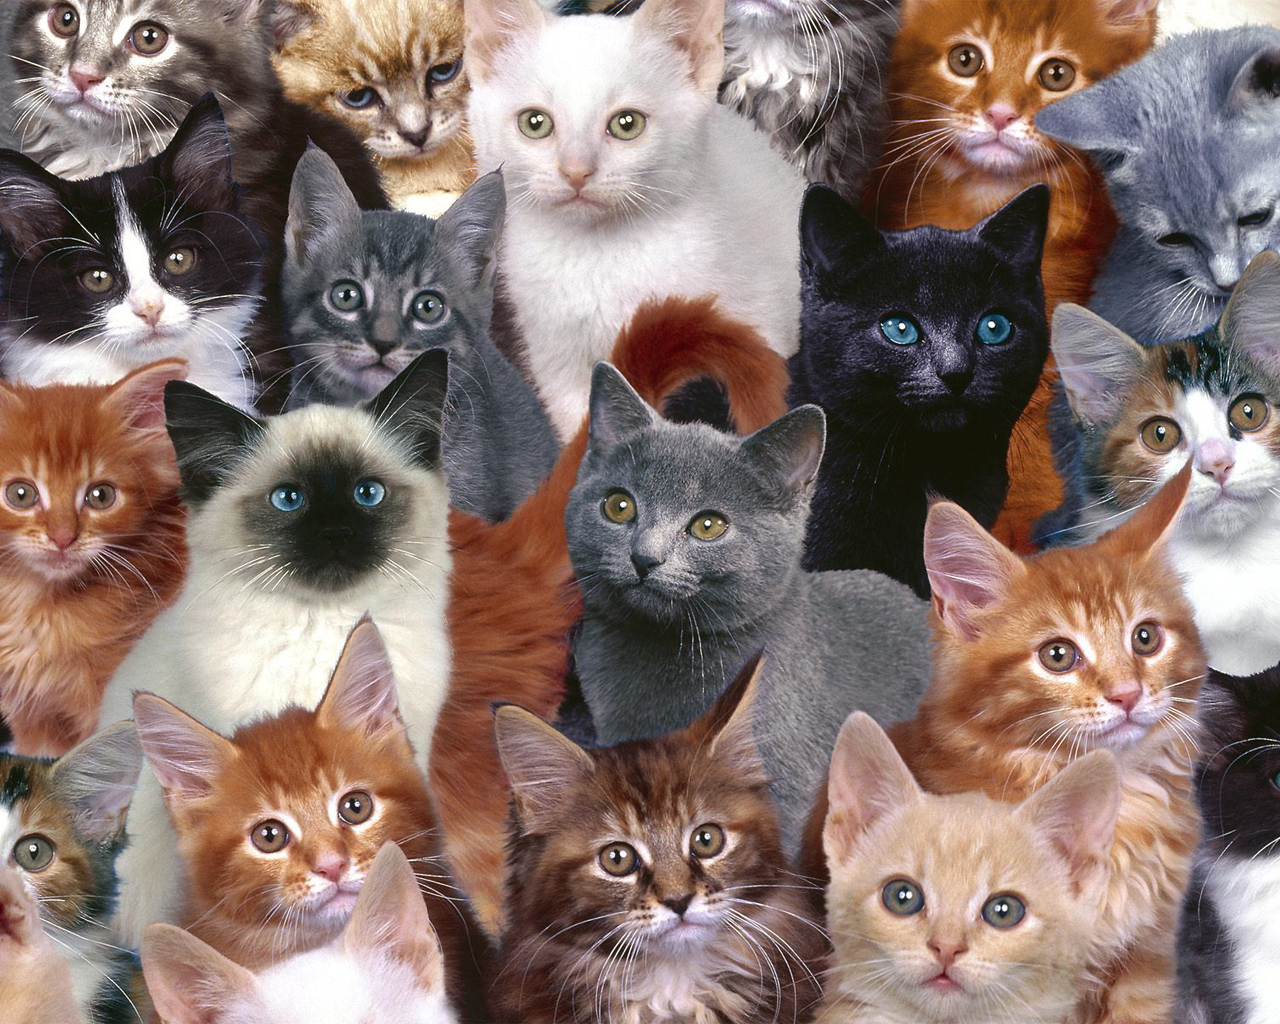 Cats-wallpaper-cats-5194935-1280-1024.jpg